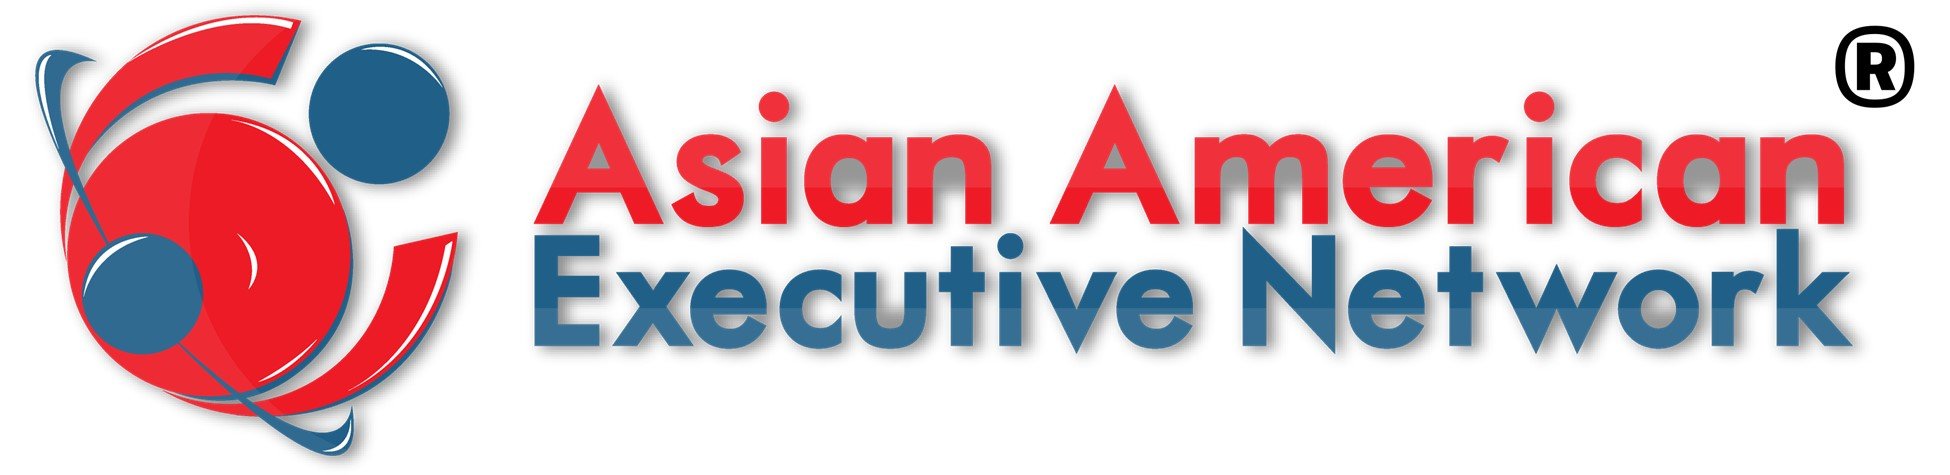 asianamericanexecutivenetwork-logo-R copy.jpg